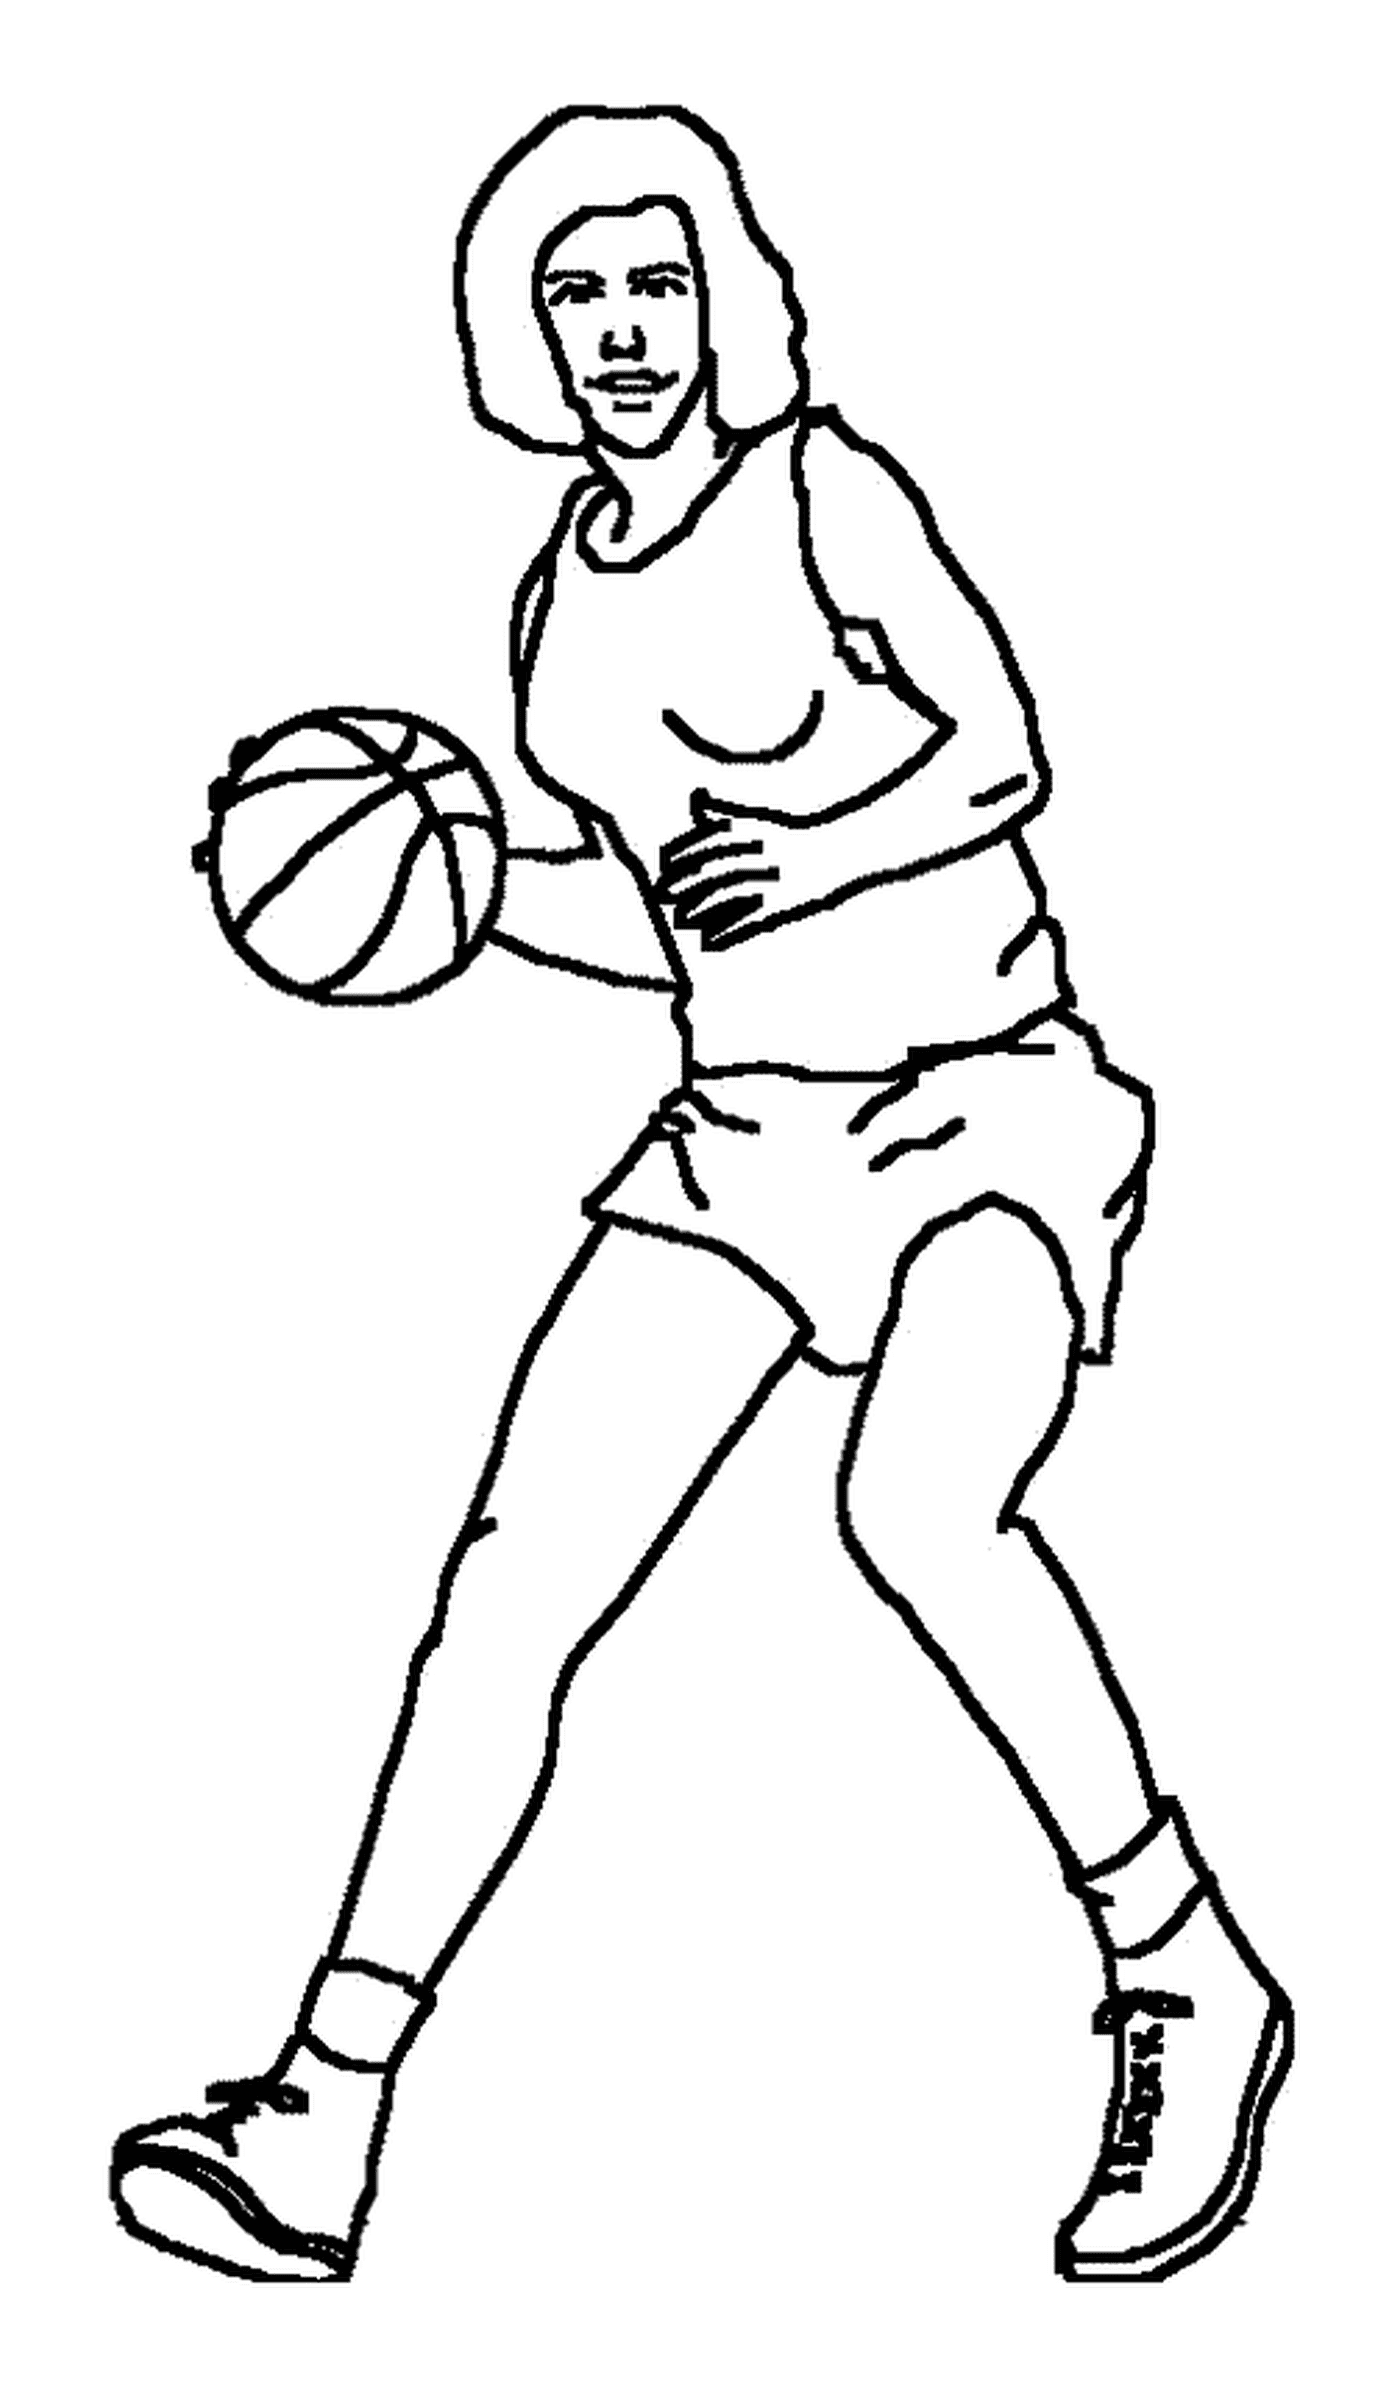   Une joueuse de basketball avec un ballon 